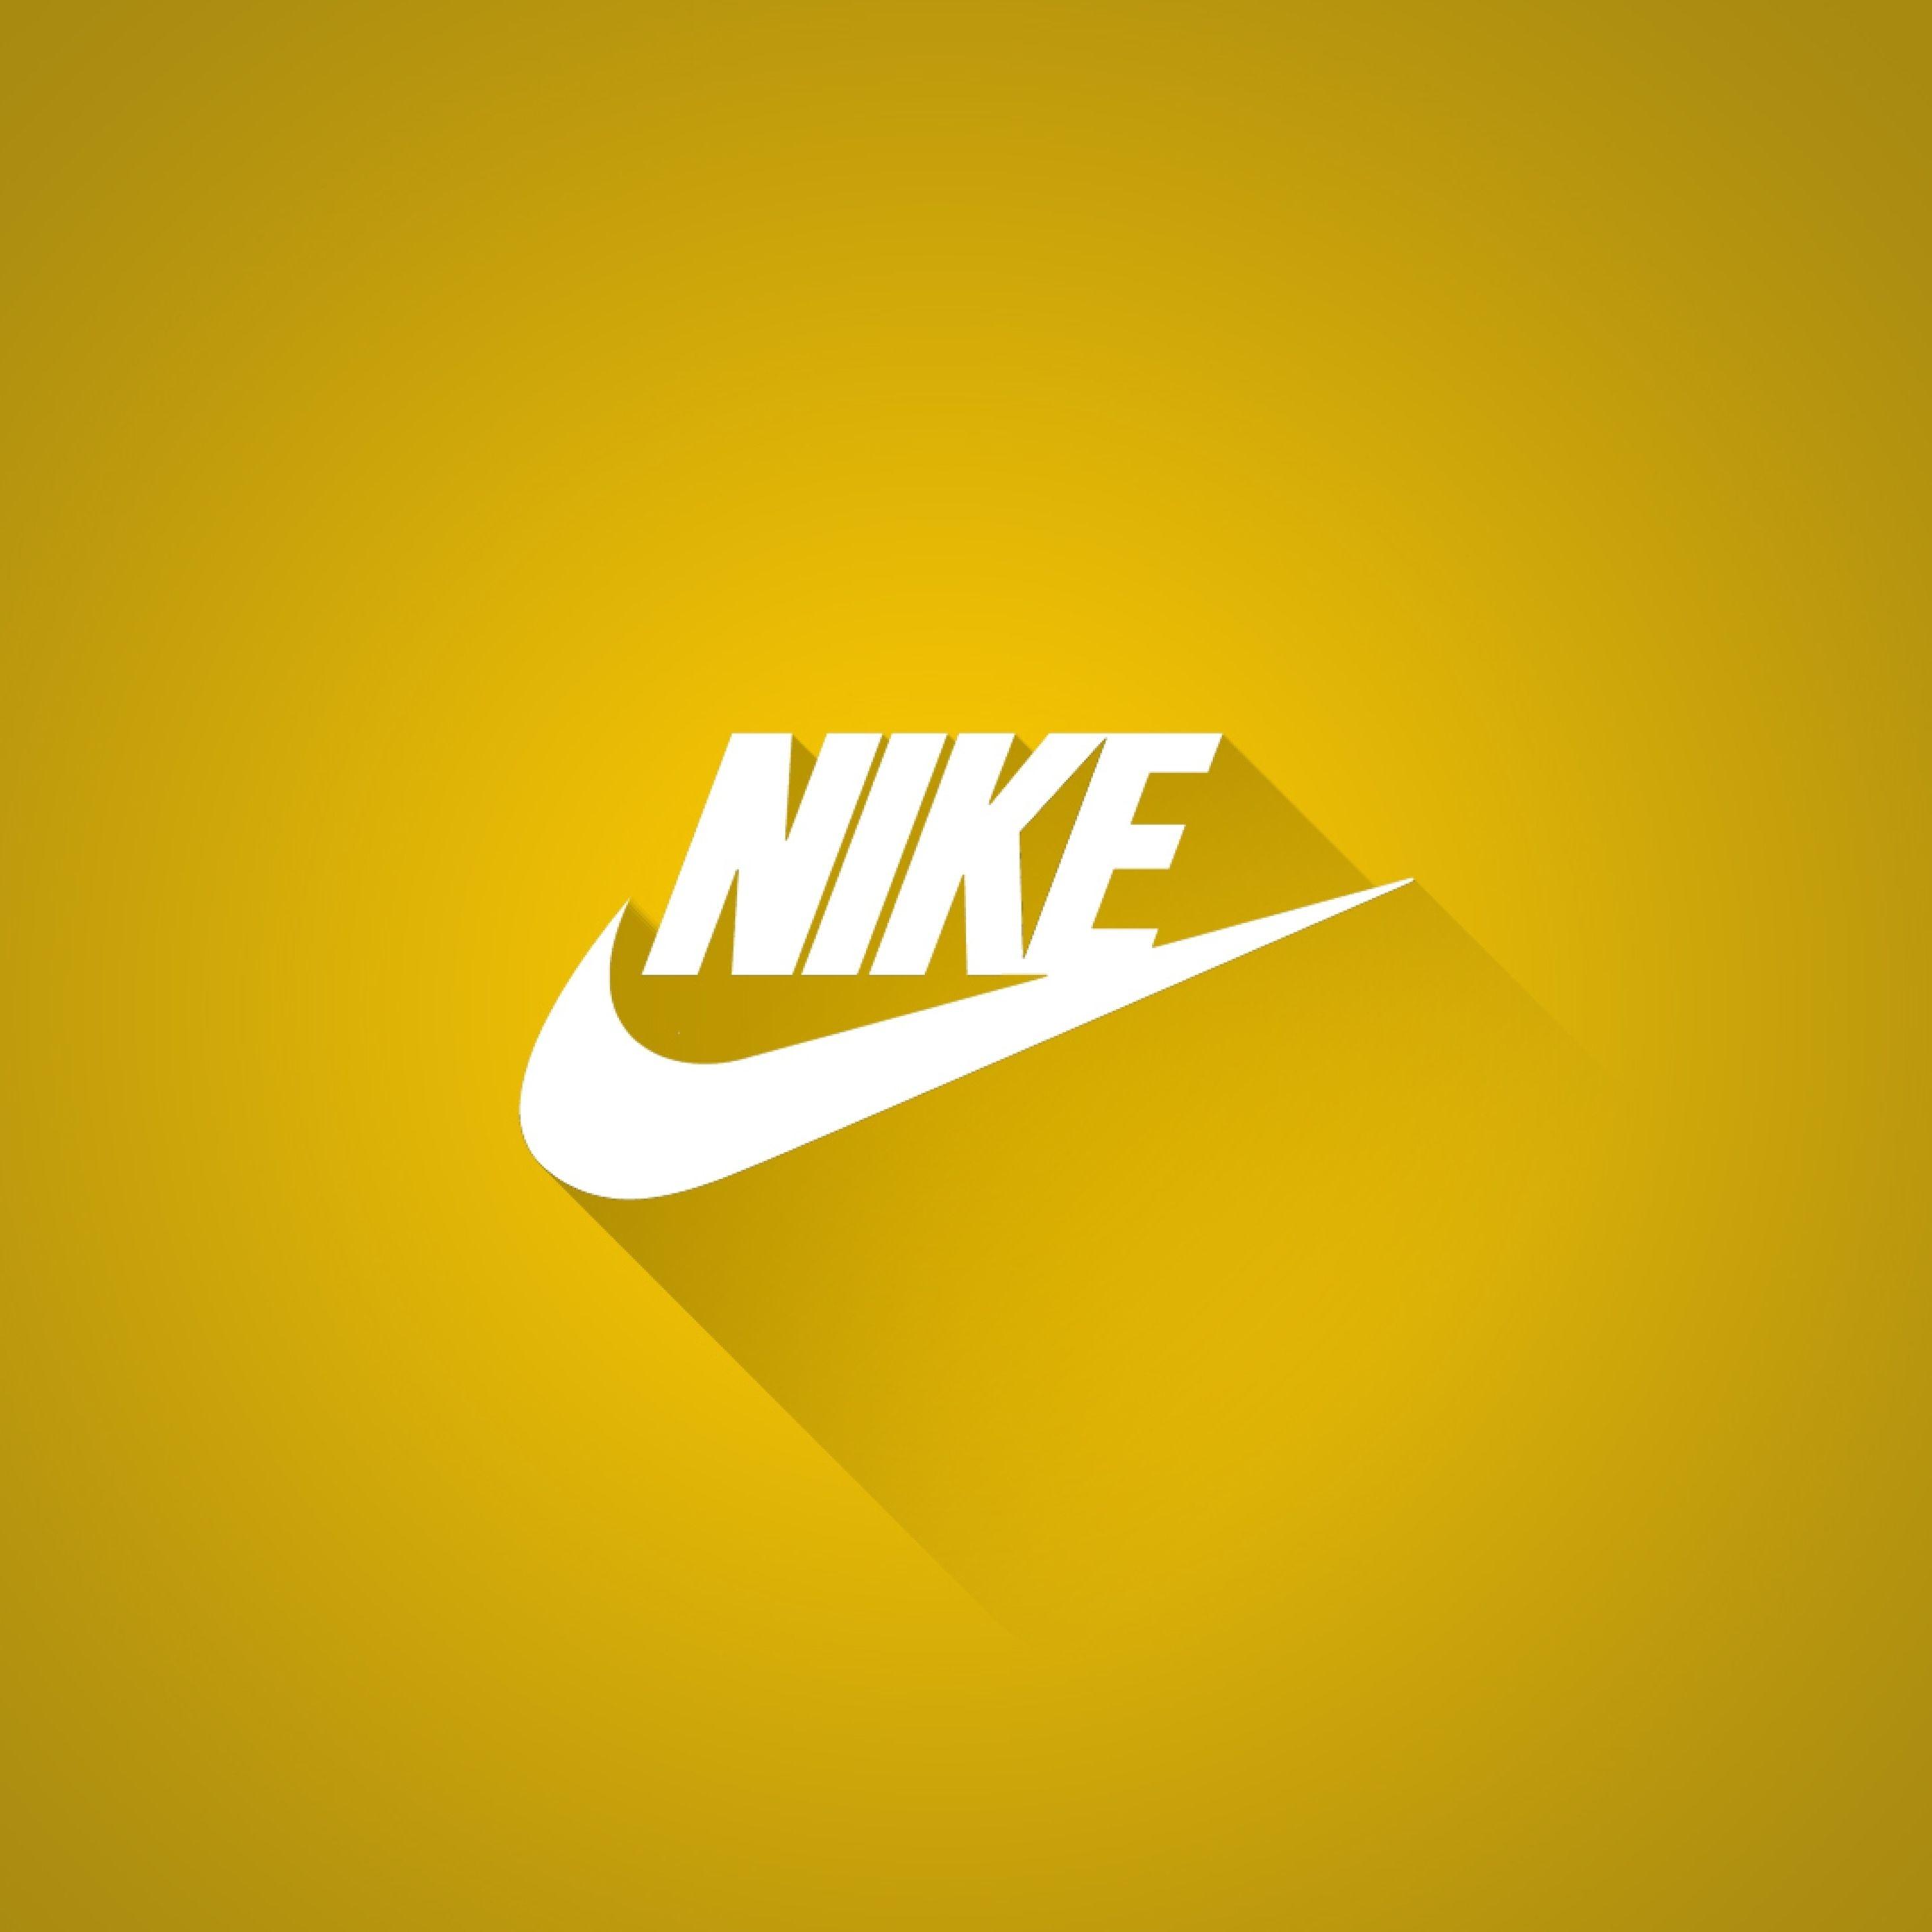 Nike Ipad Wallpapers Top Free Nike Ipad Backgrounds Wallpaperaccess